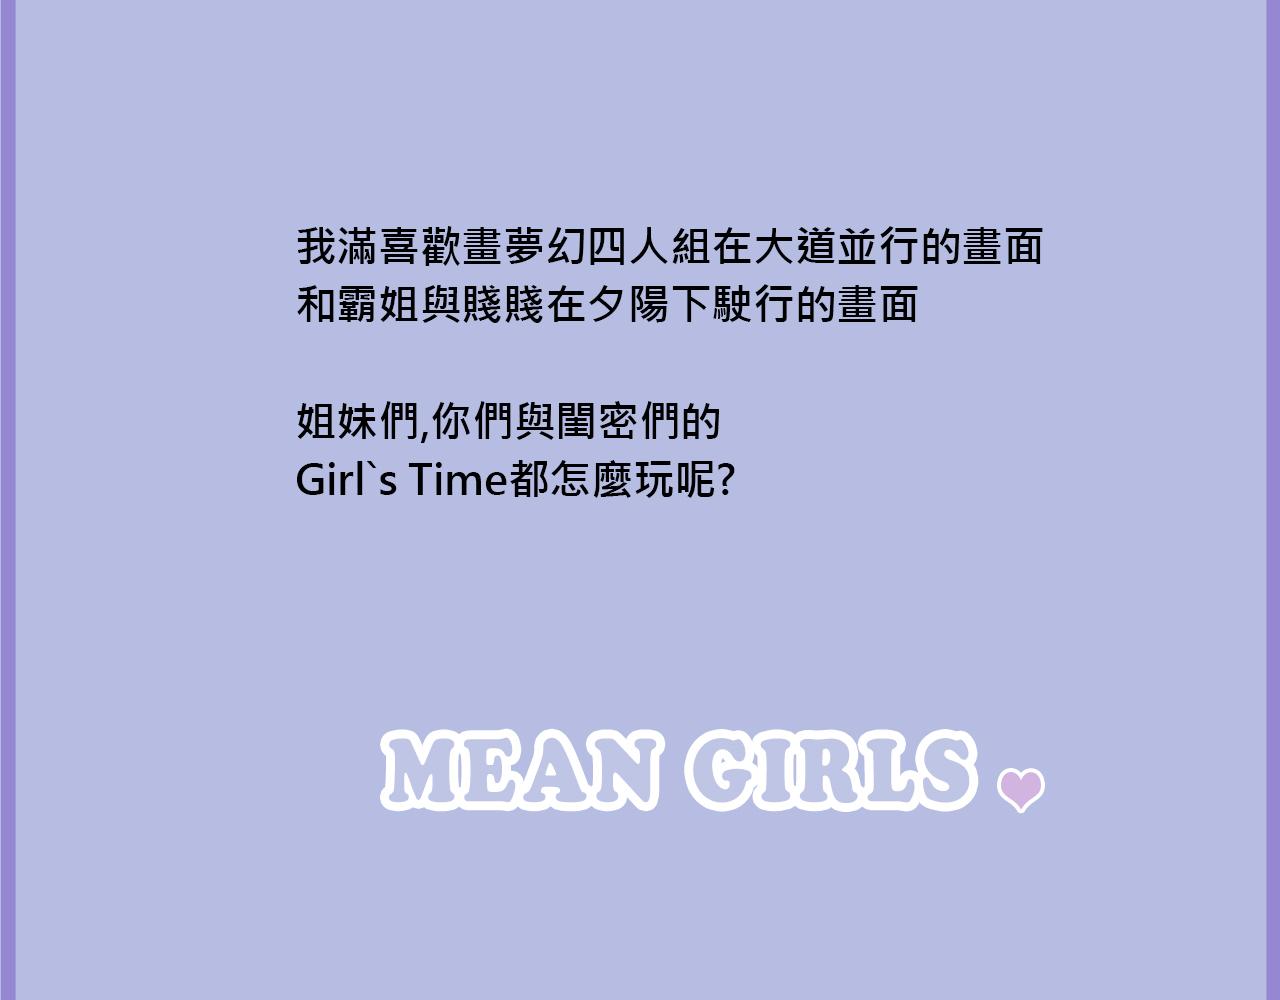 Mean girls又甜又茶的富家女 - 她們的Girls Time - 2